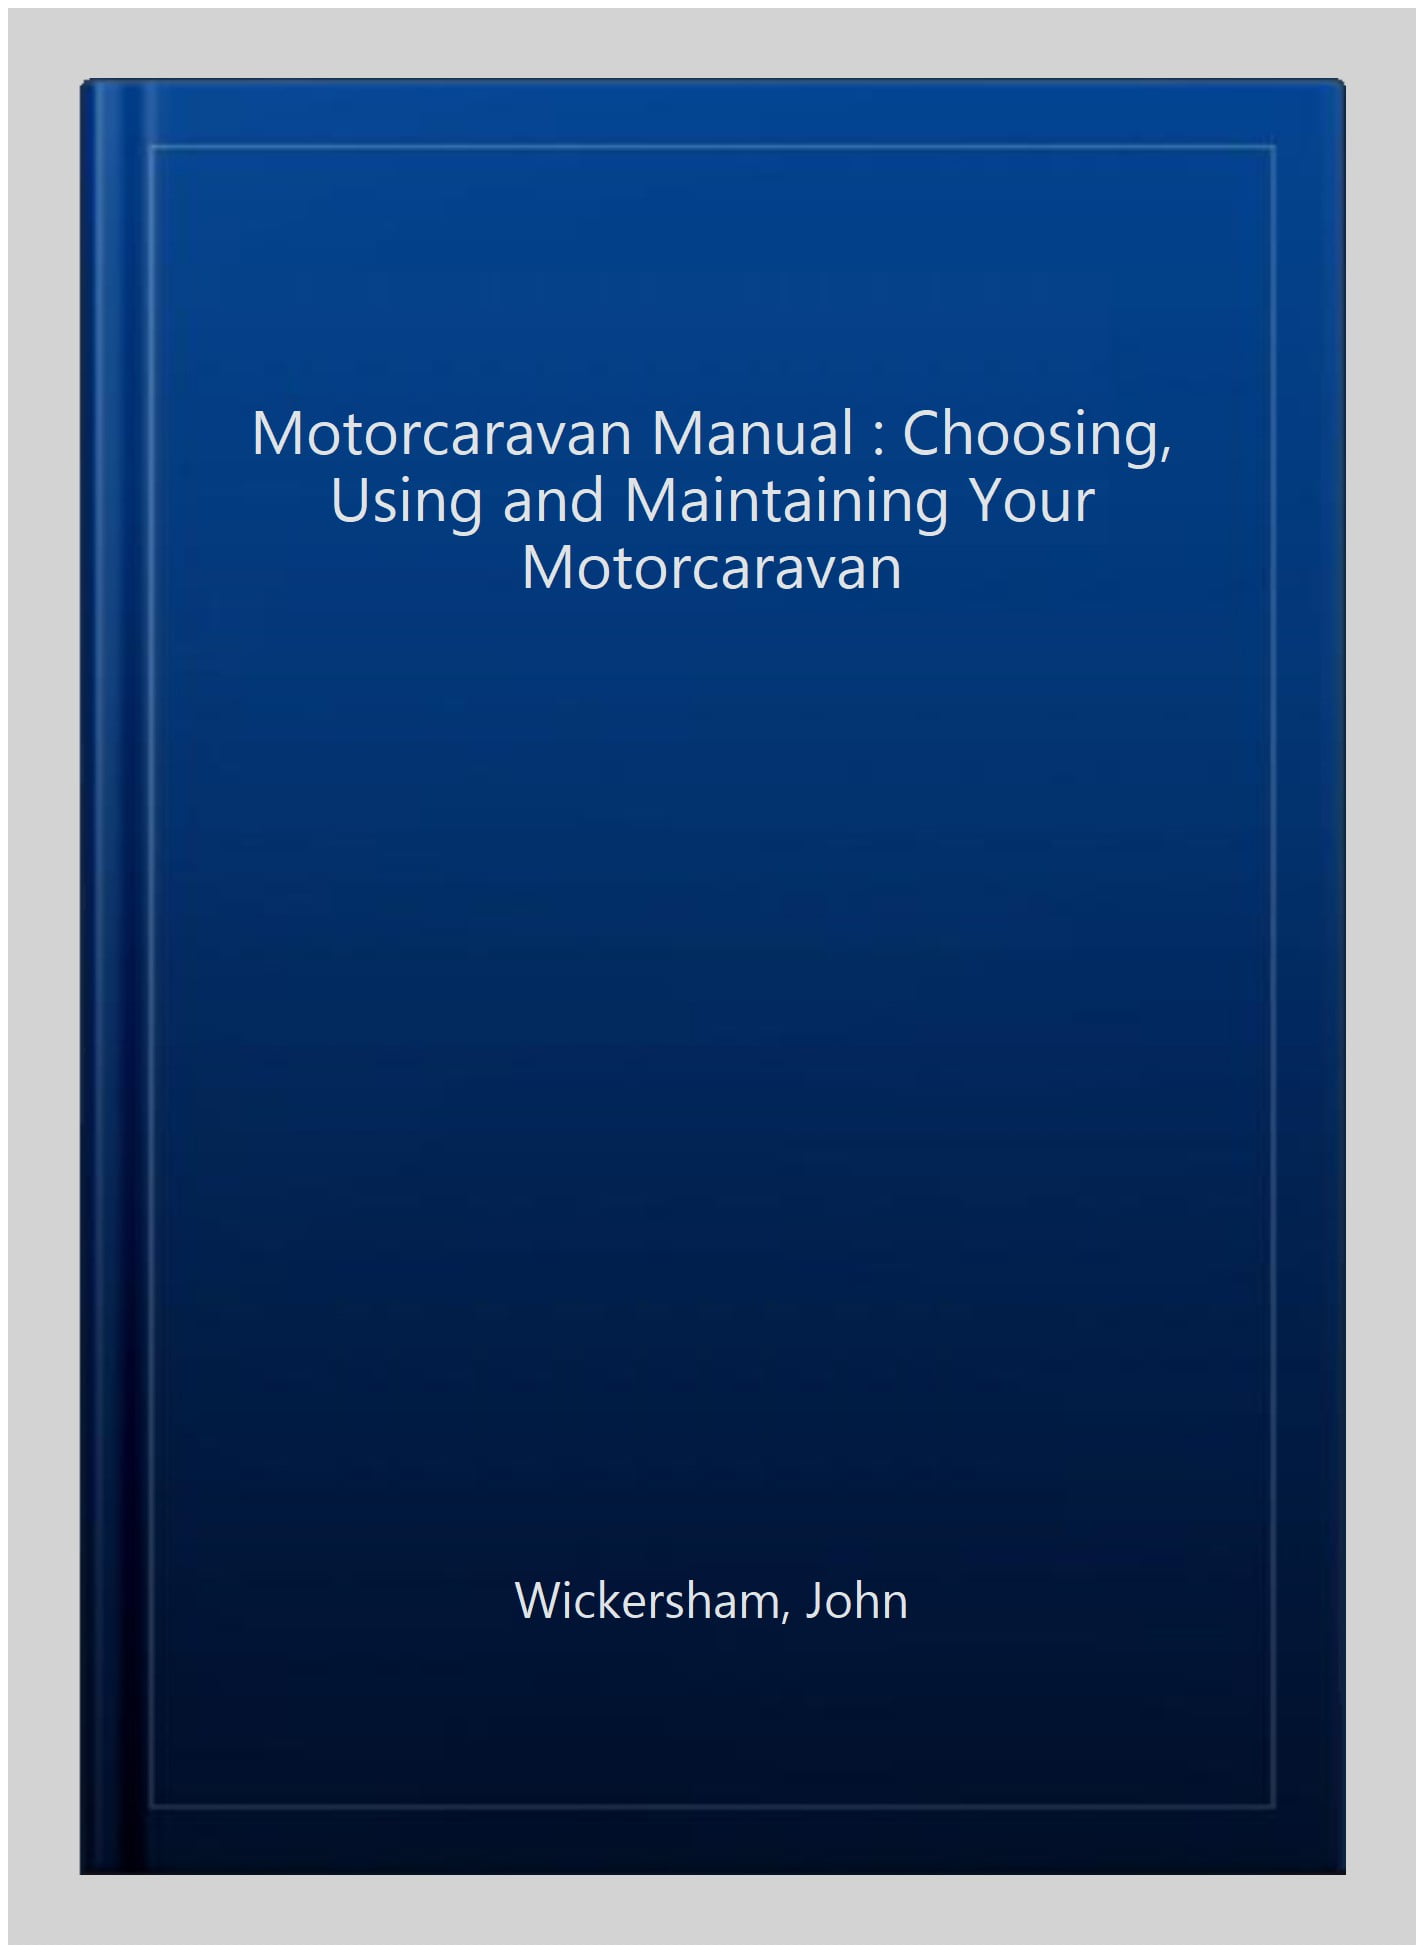 Motorcaravan Manual Choosing Using and Maintaining Your Motorcaravan